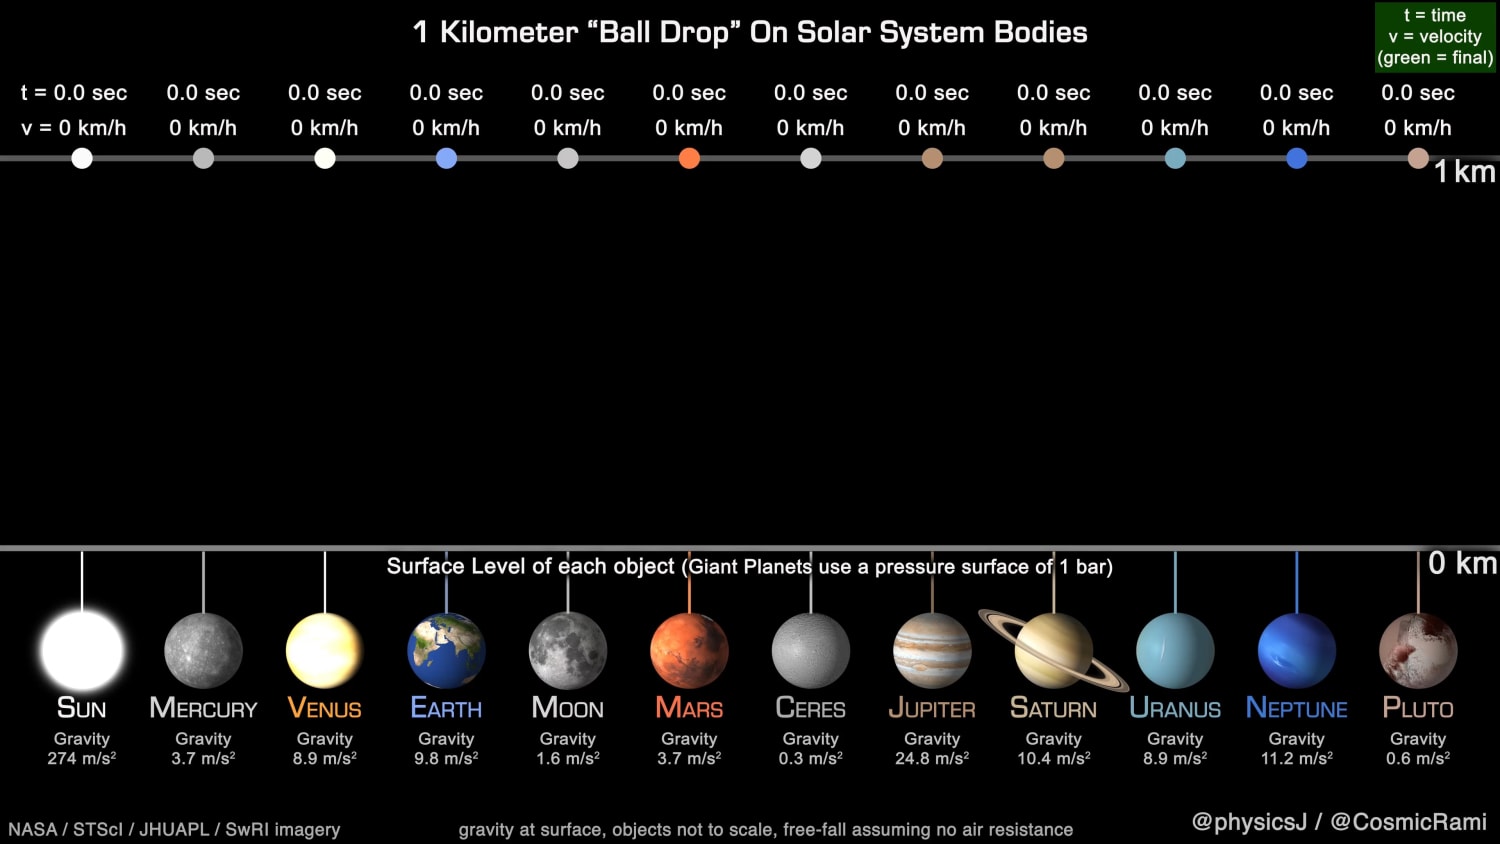 A 1 Kilometer "Ball Drop" On Solar System Bodies